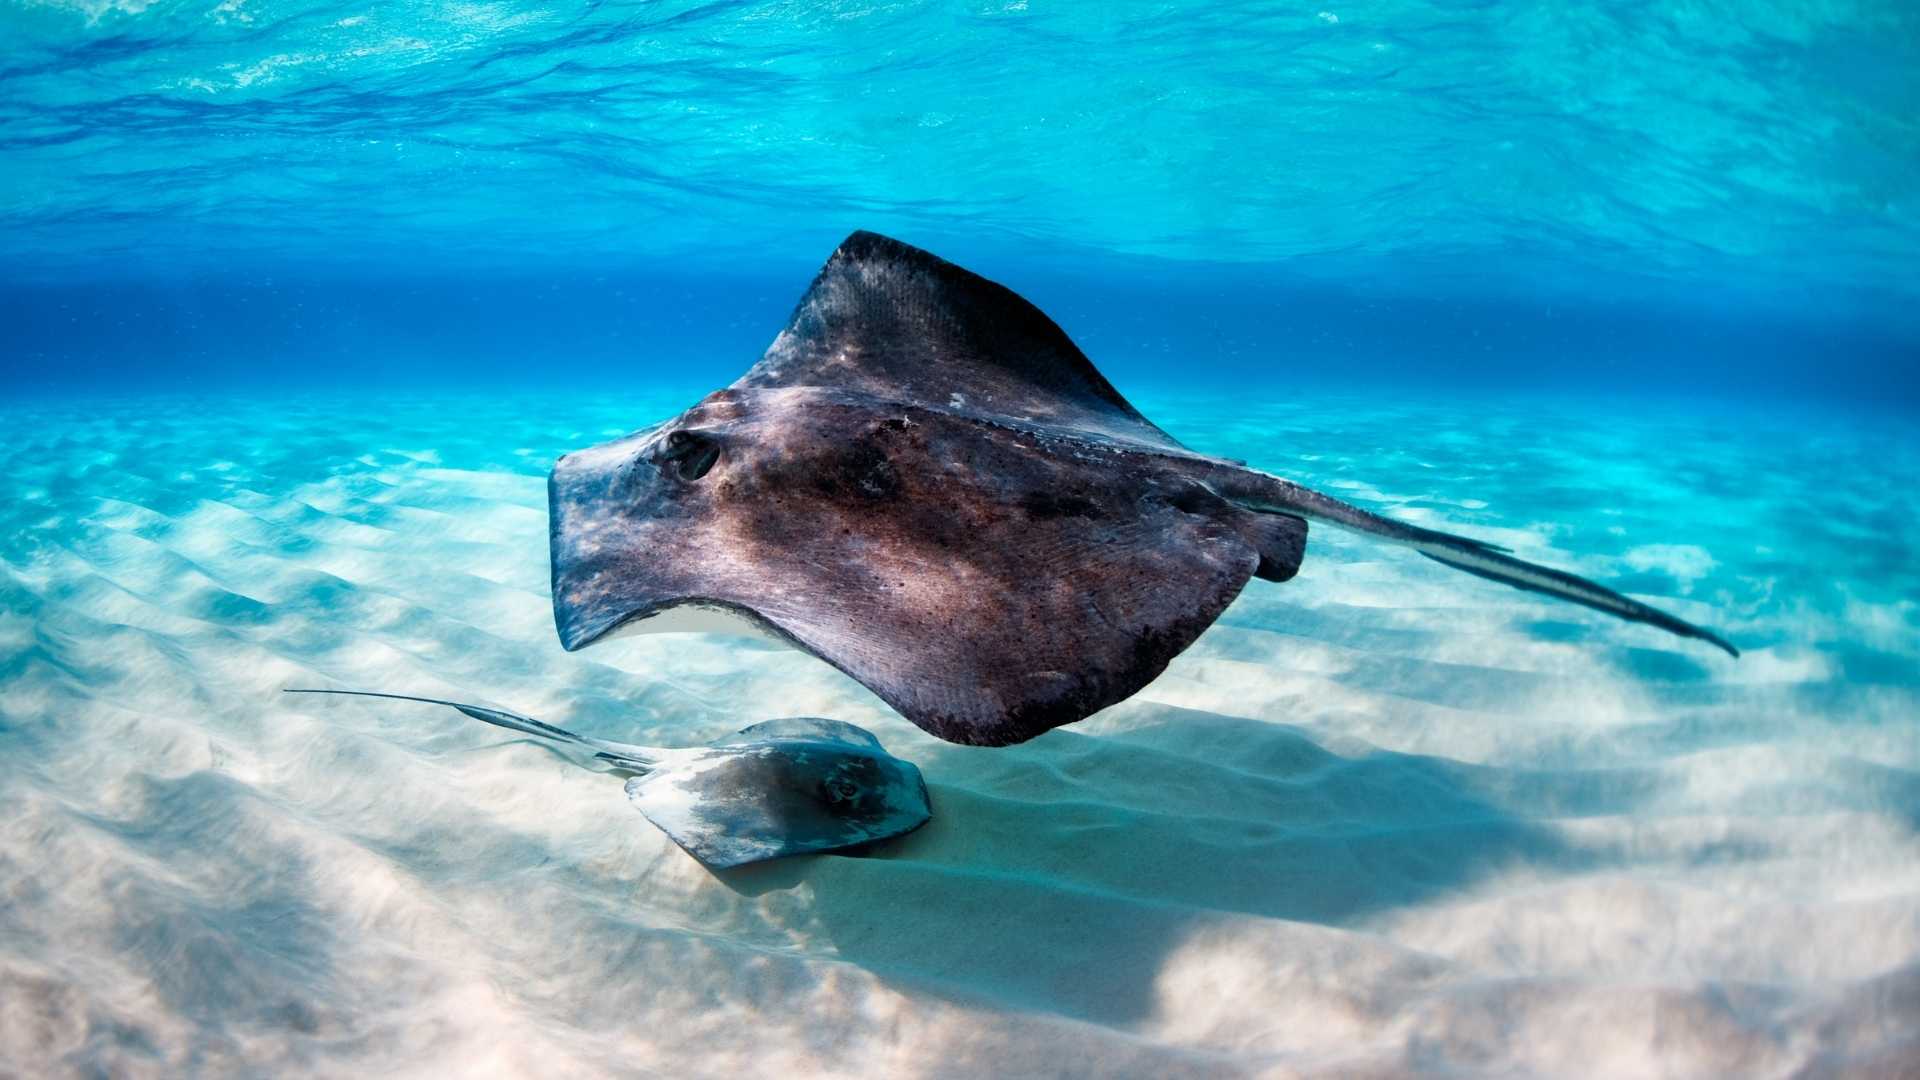 Galapagos rays